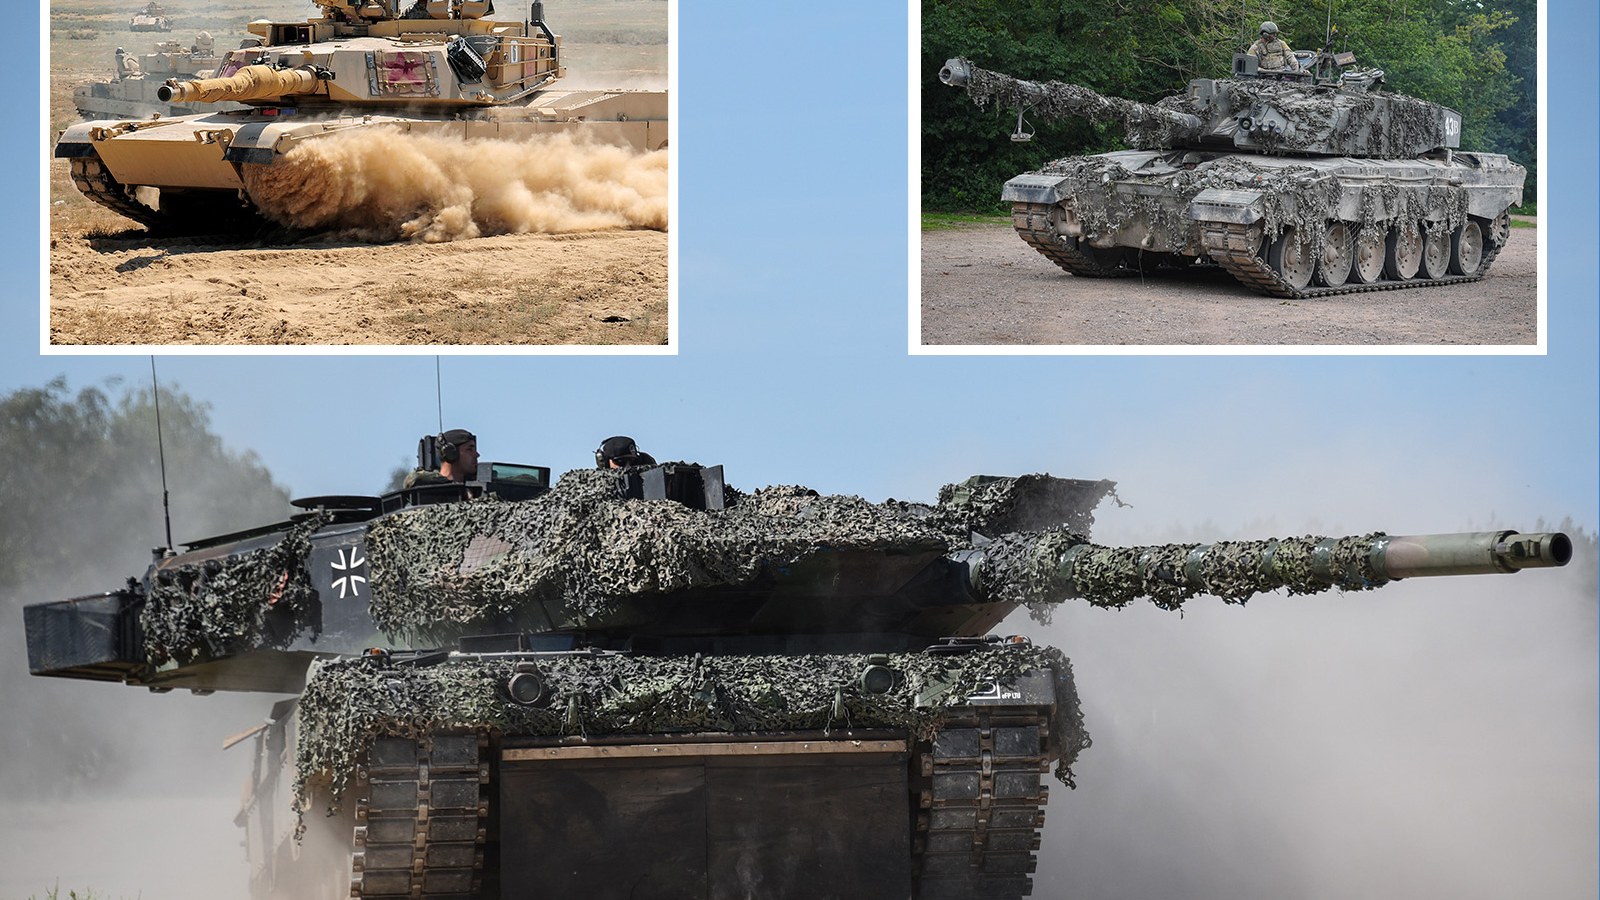 America's Next Main Battle Tank May Be Lighter, High-Tech AbramsX